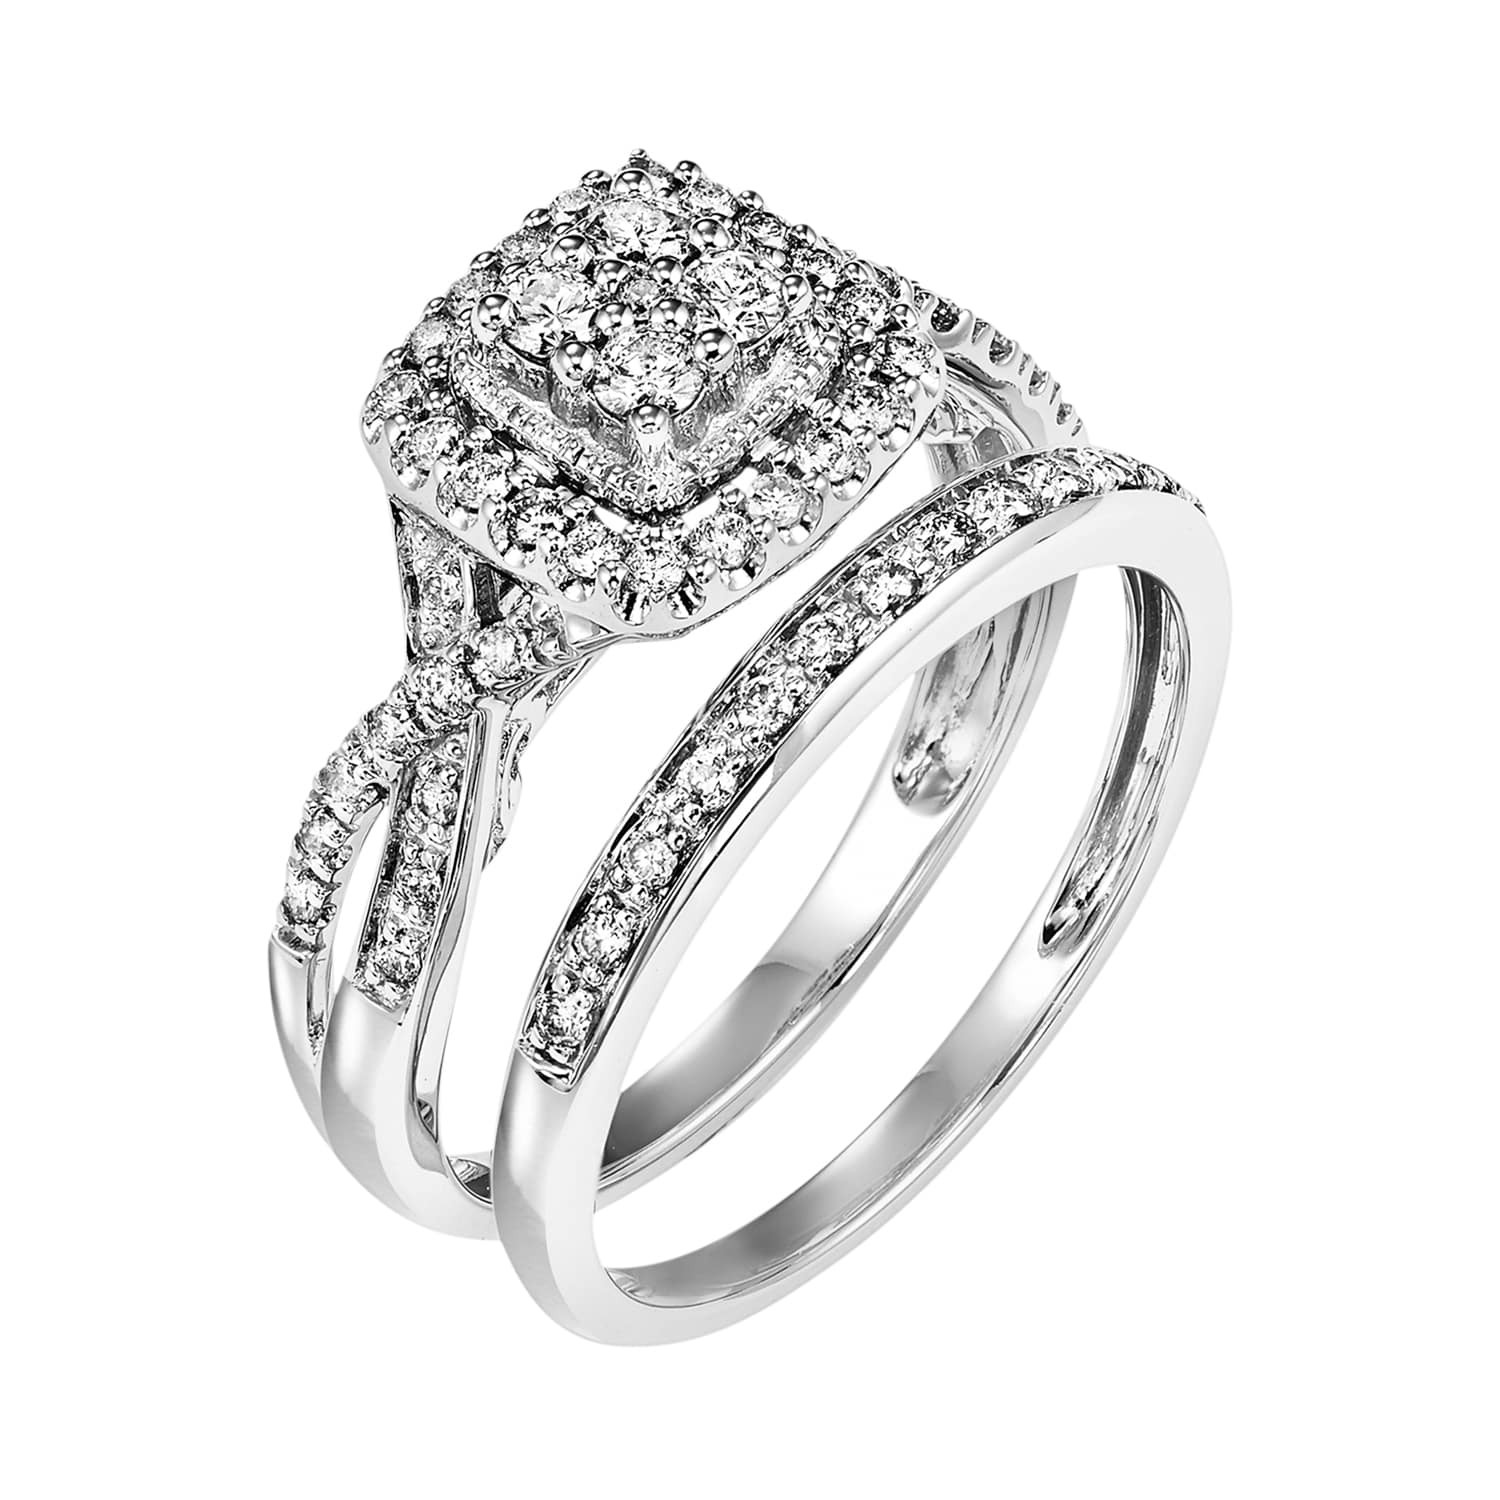 Kohls Wedding Rings
 Elegant Kohls Wedding Ring Sets Matvuk